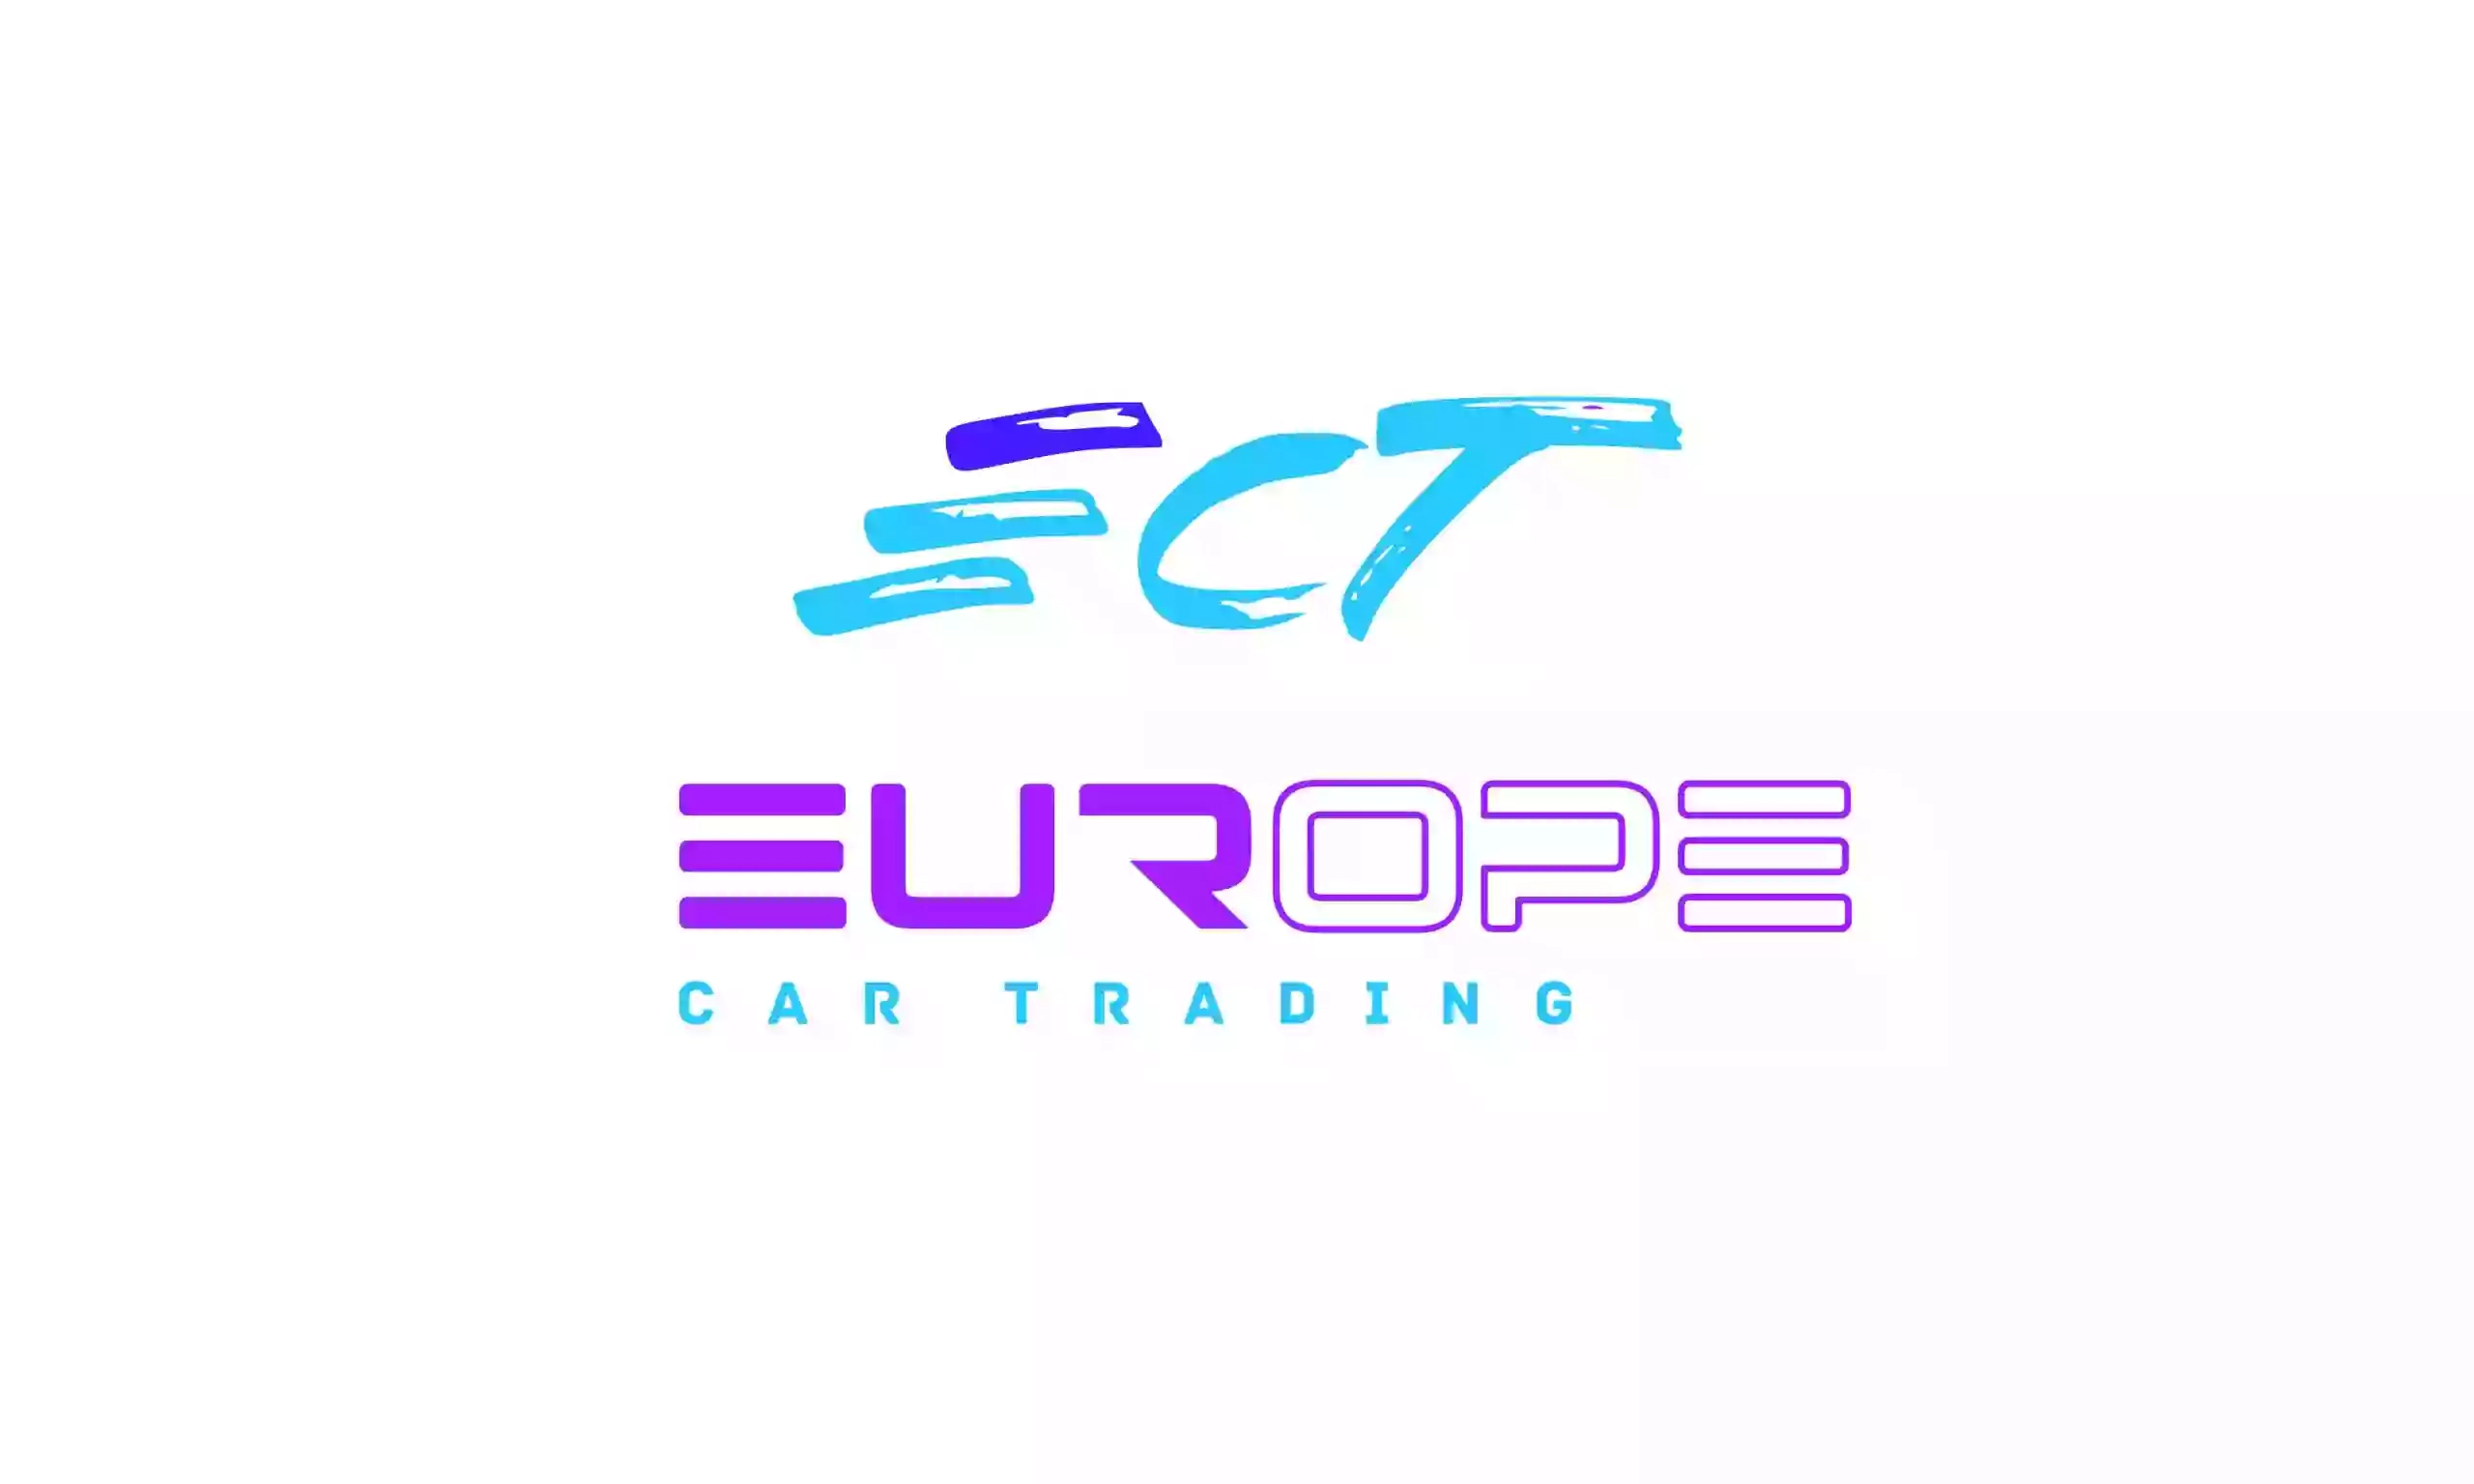 europe car trading srls